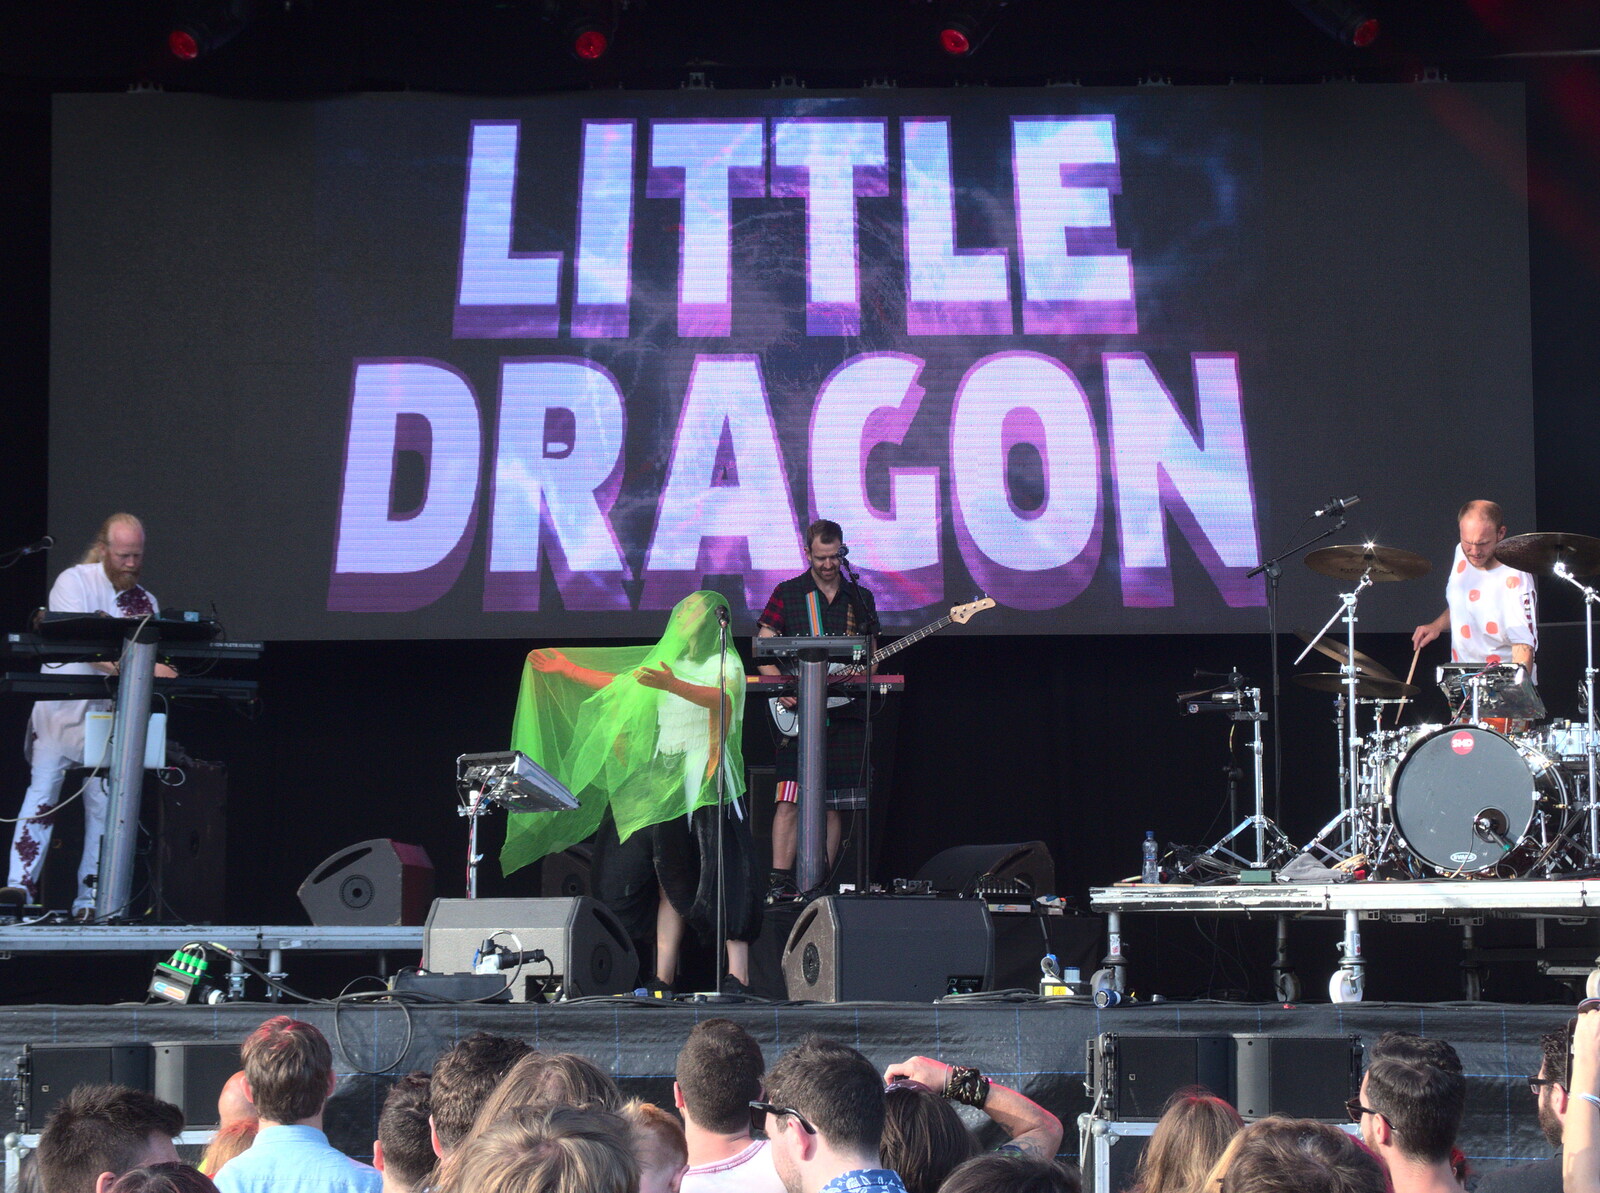 Performance/art band 'Little Dragon' from Beatyard Festival, Dún Laoghaire, County Dublin, Ireland - 5th August 2018